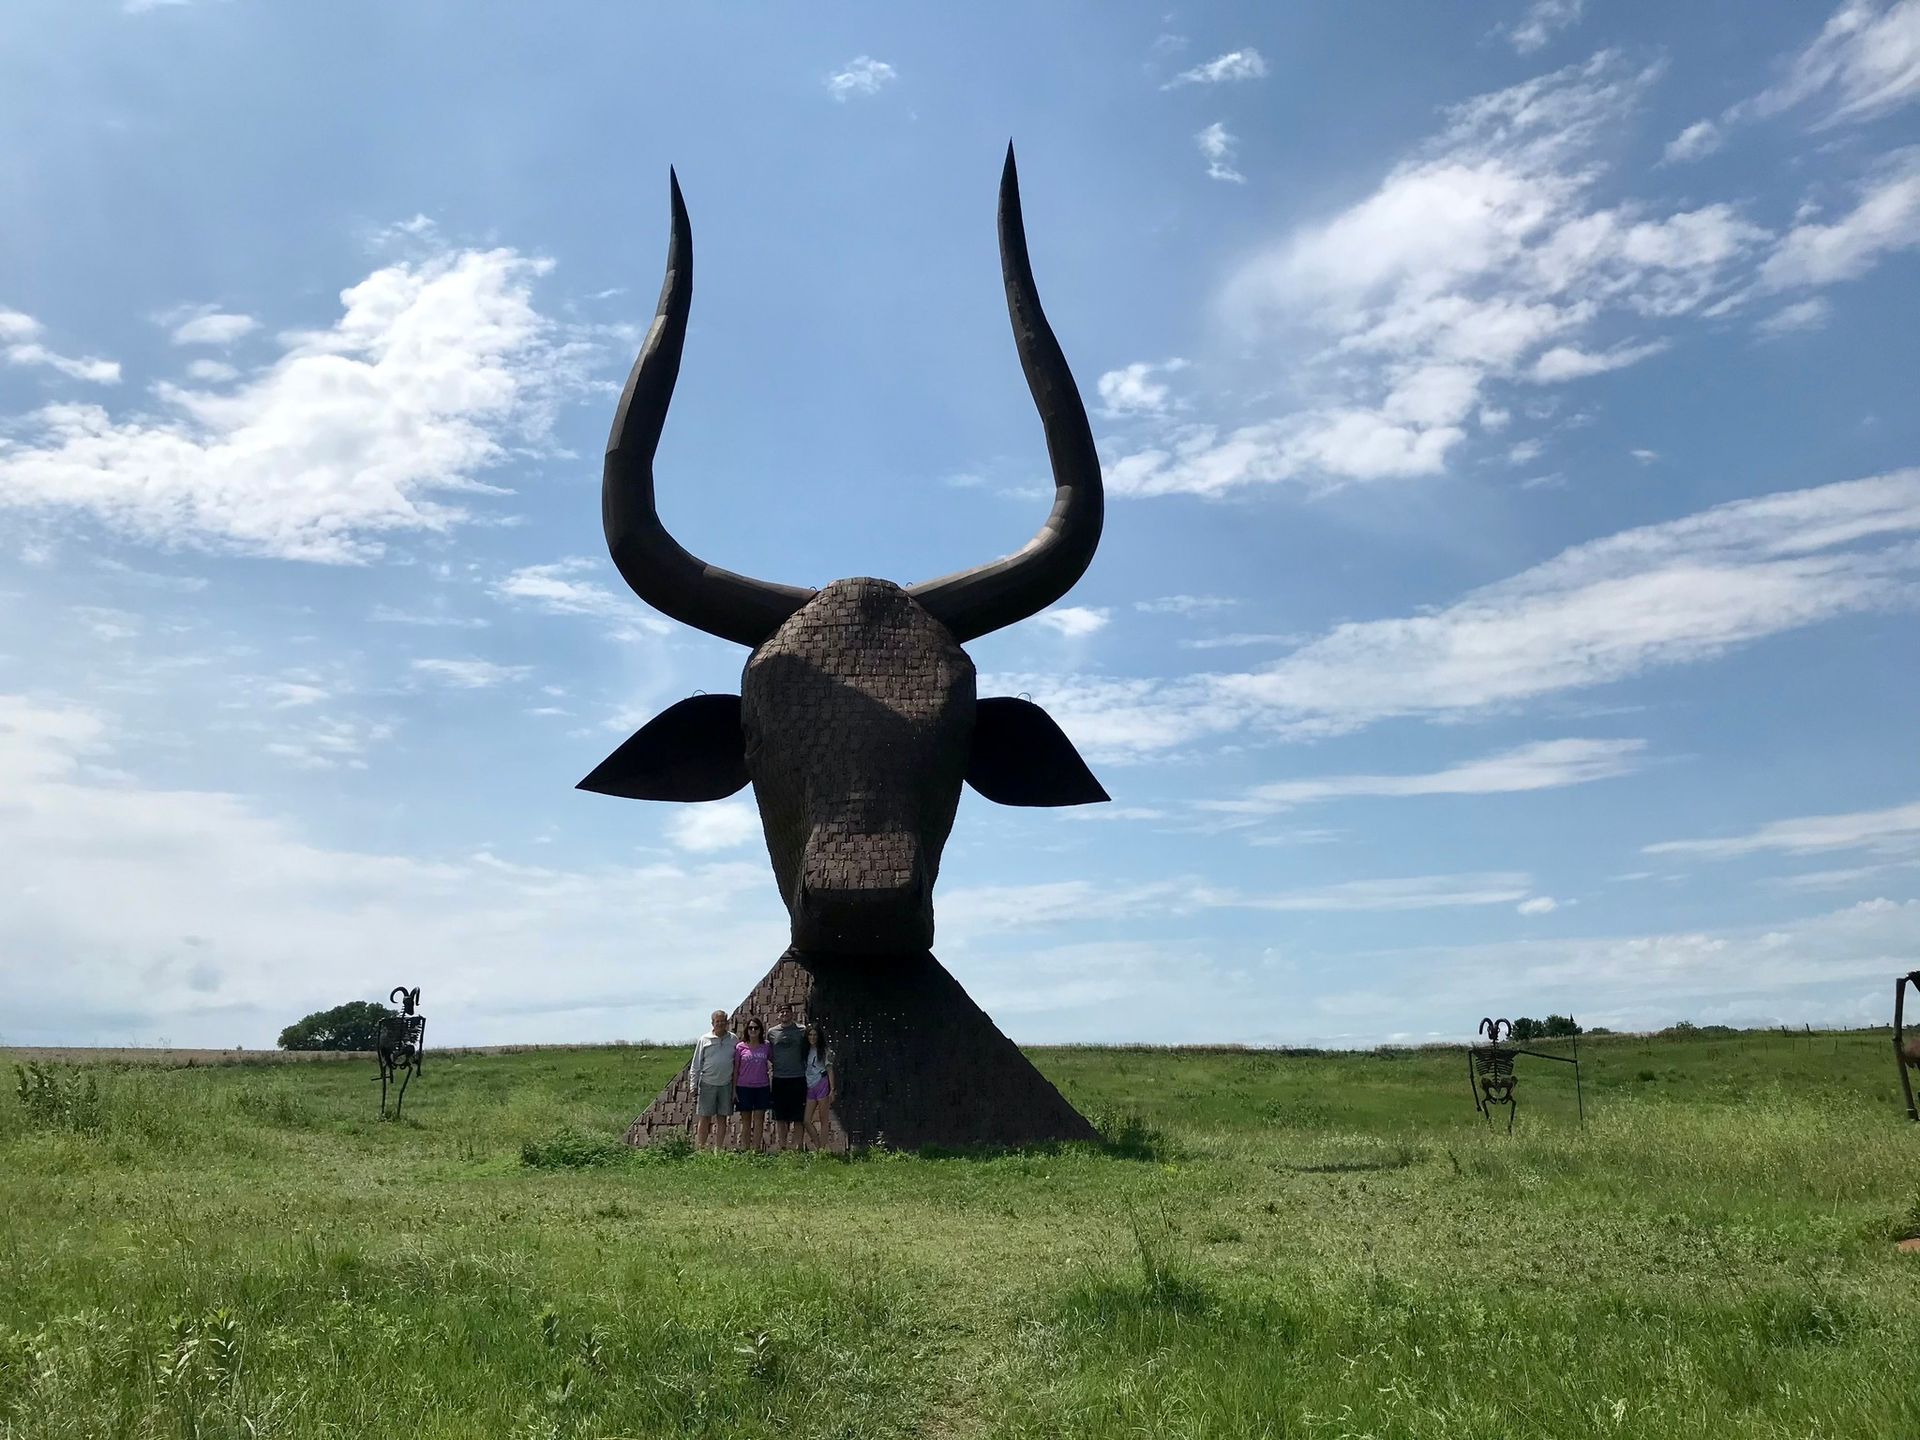 
World’s Largest Bull’s Head Sculpture, world record in Montrose, South Dakota